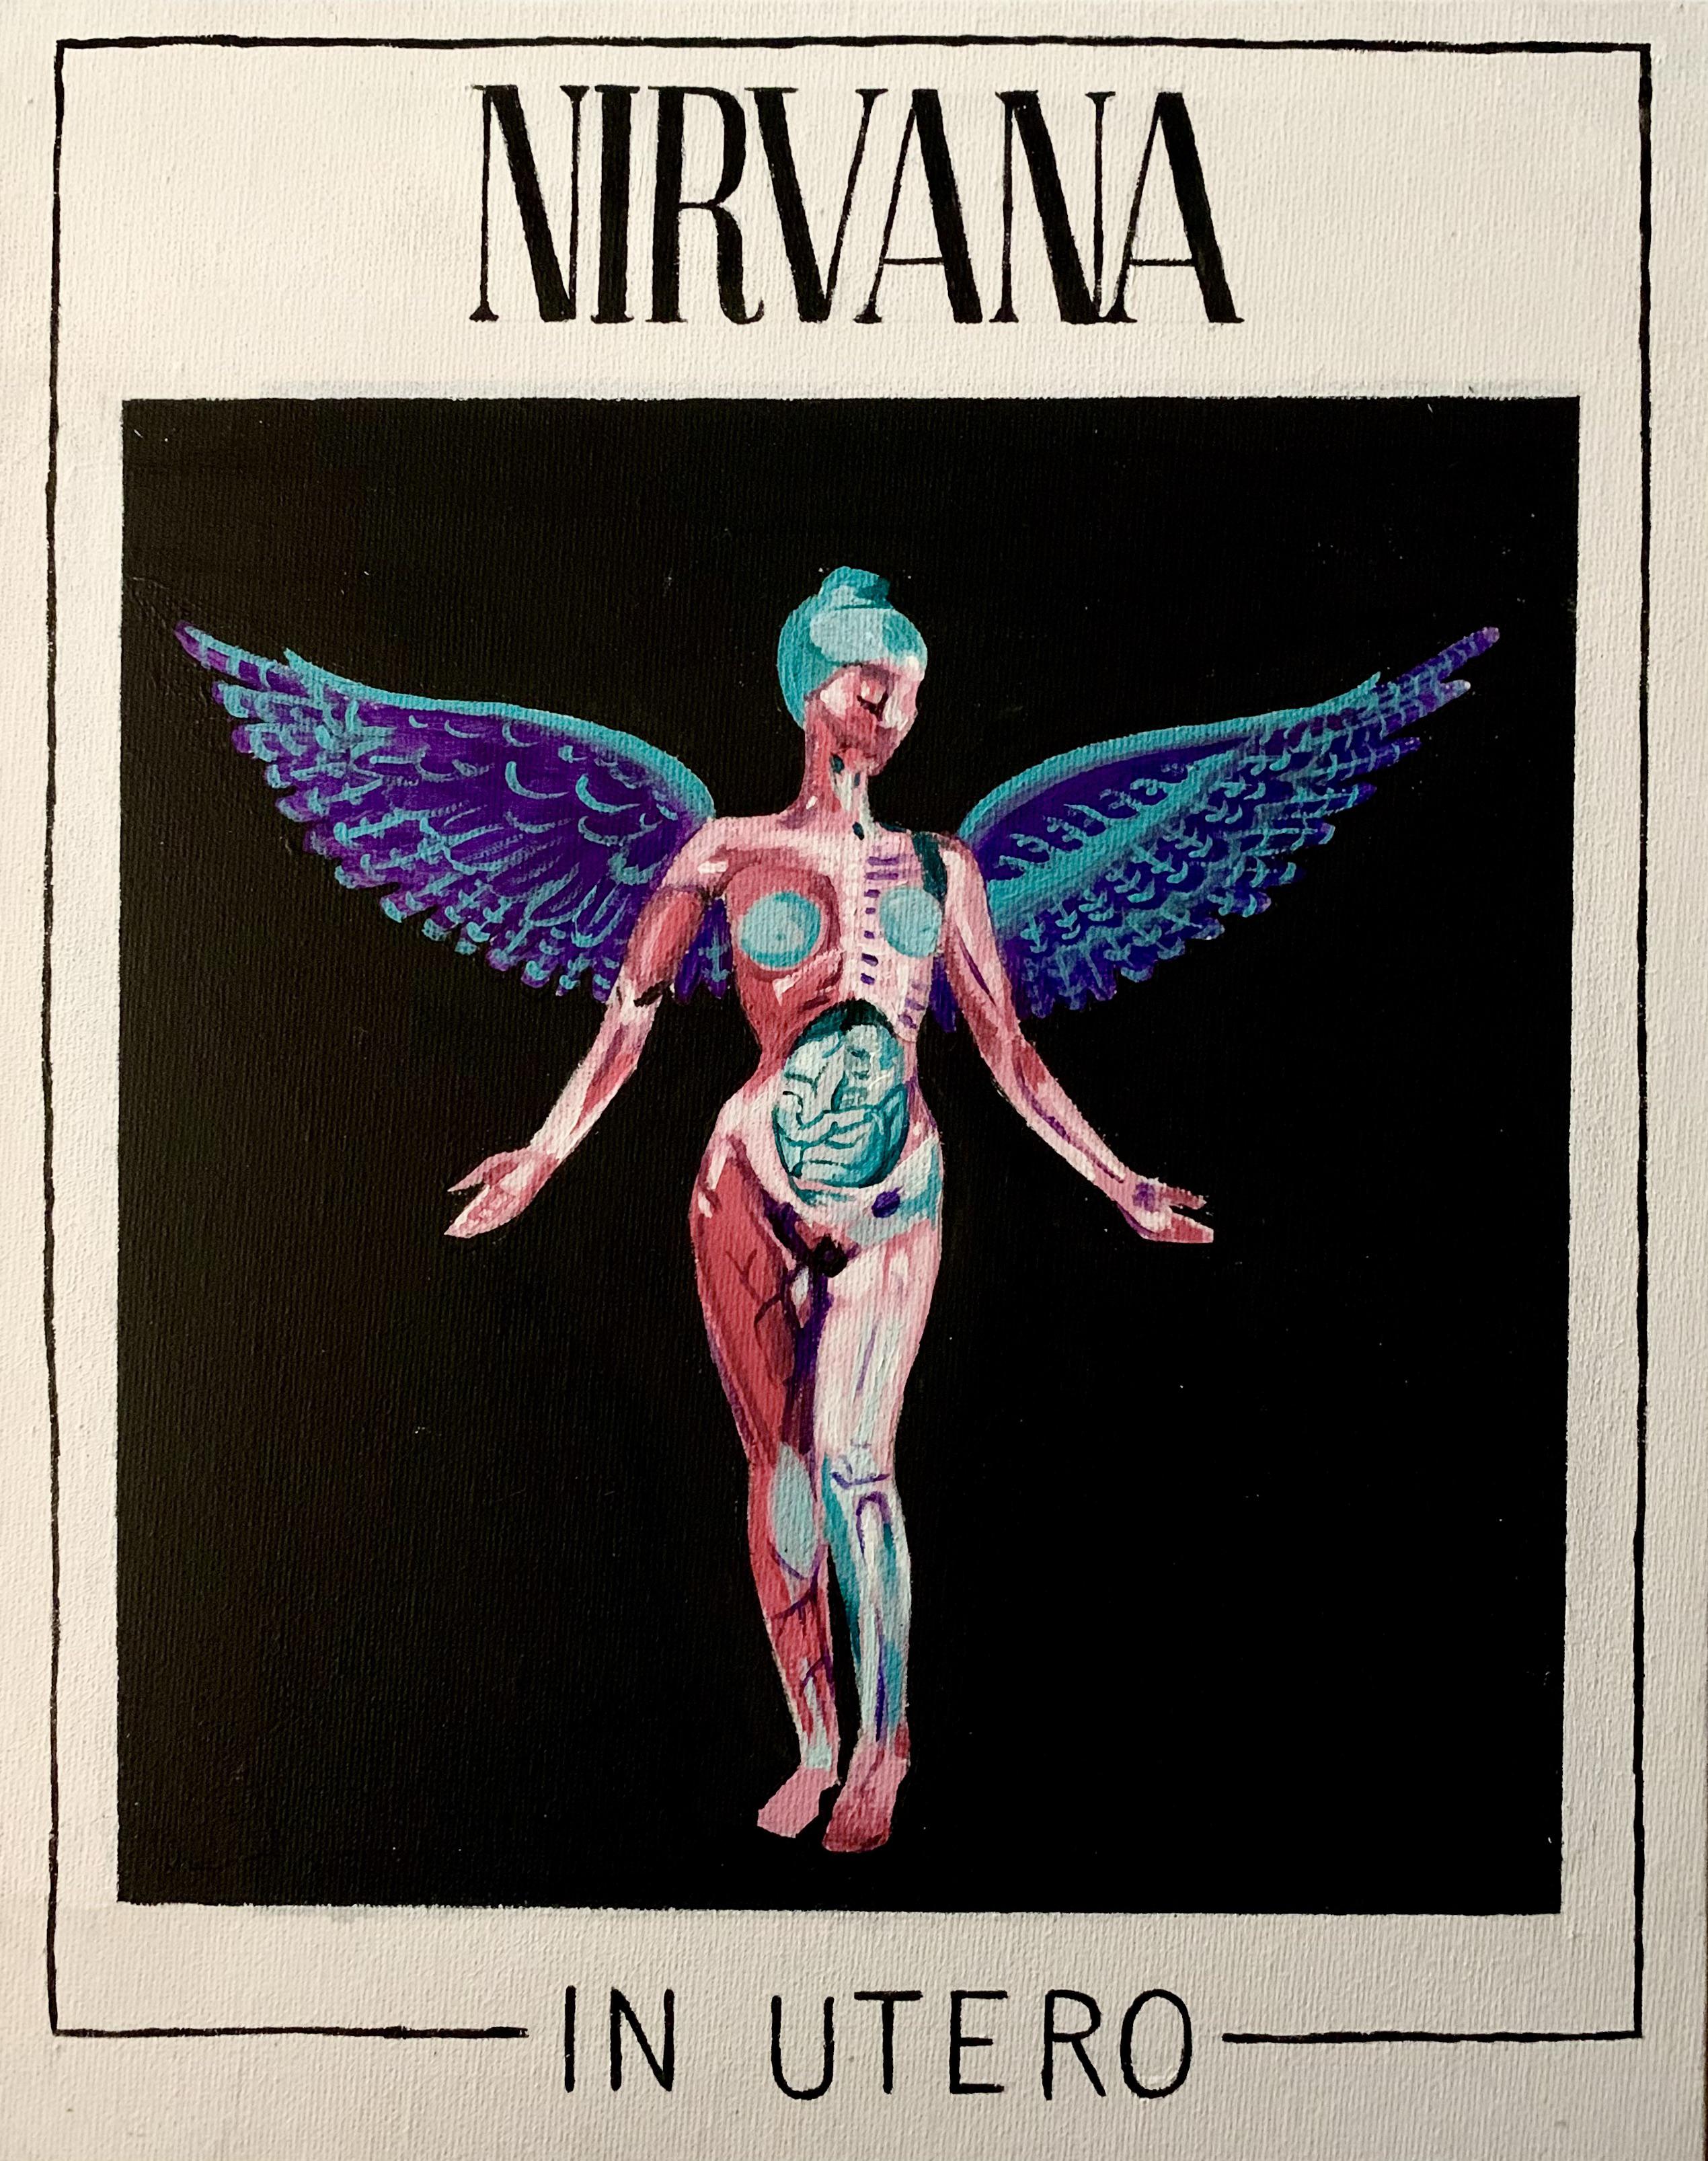 In Utero commercial 1993 nirvana30th kurtcobain davestruestories  darburynovoselic bobcatgoldthwait  Instagram